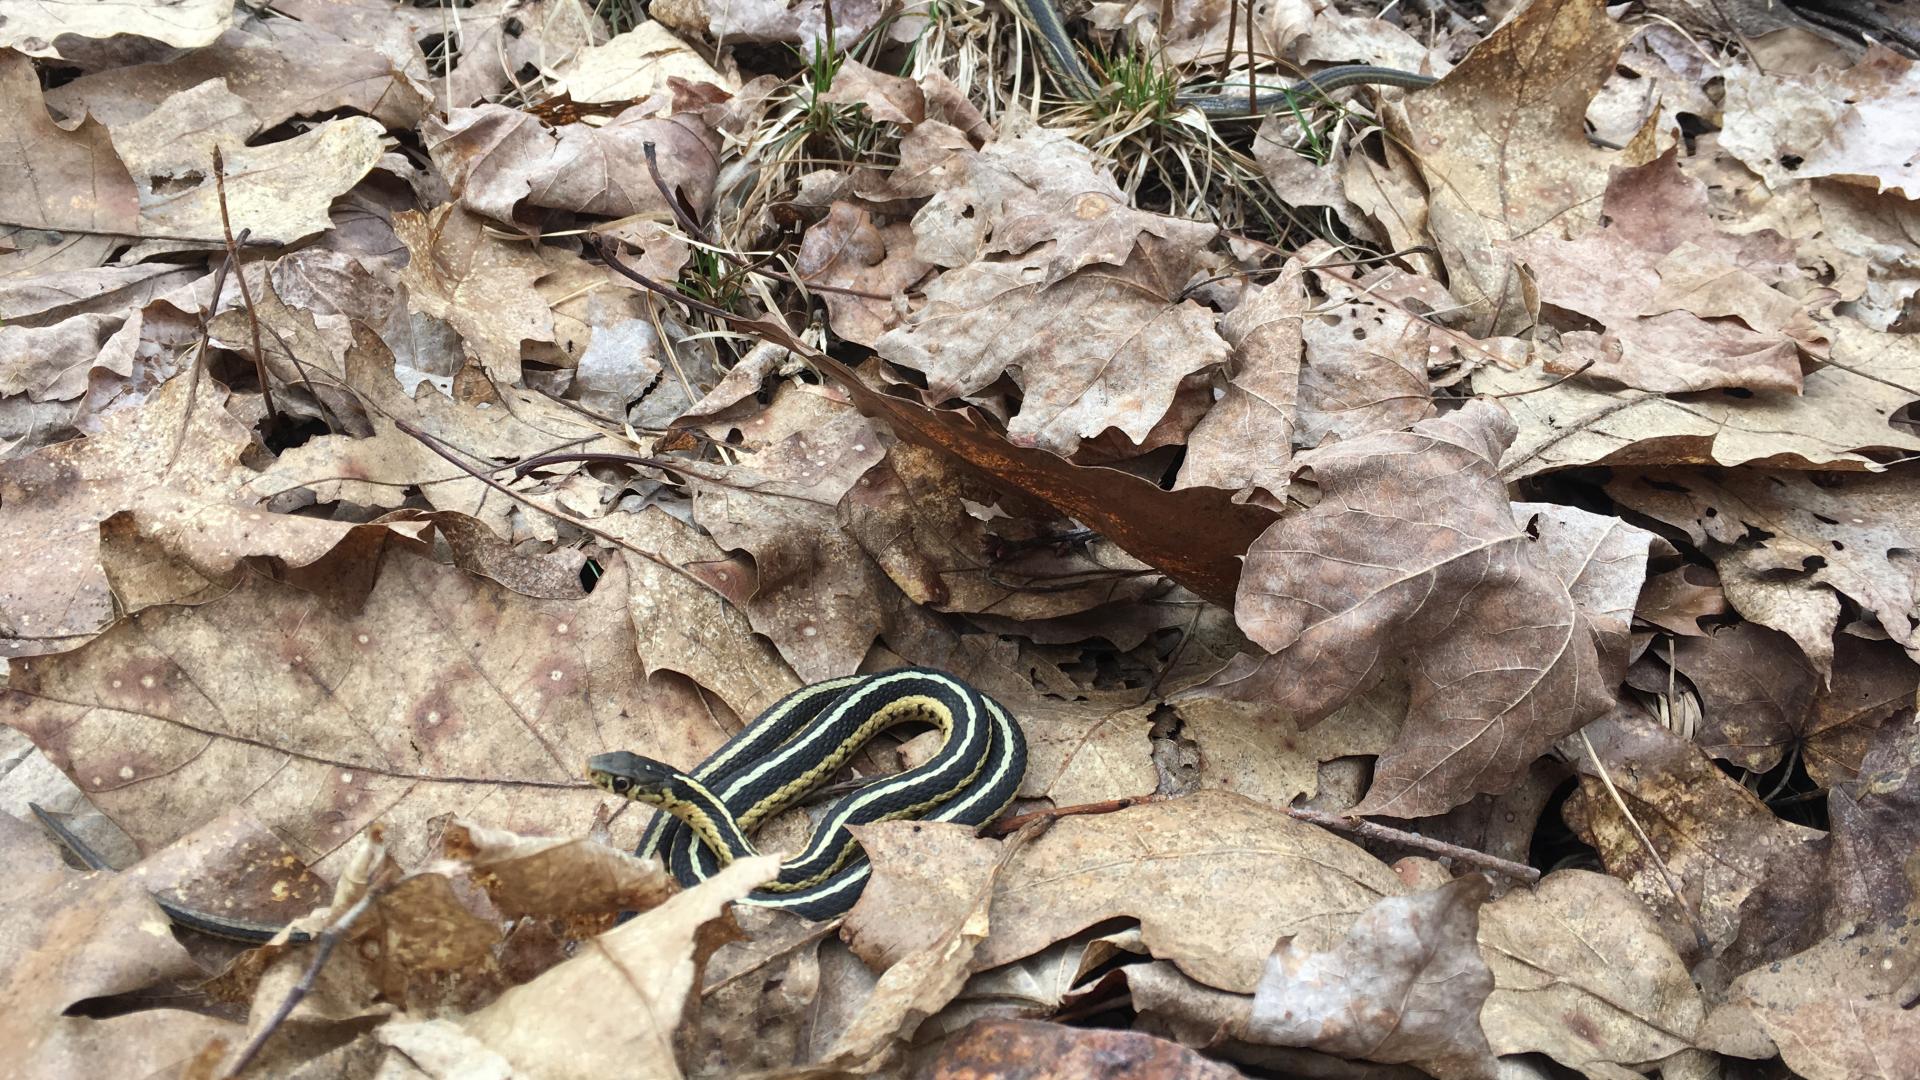 Snakes in leaf litter